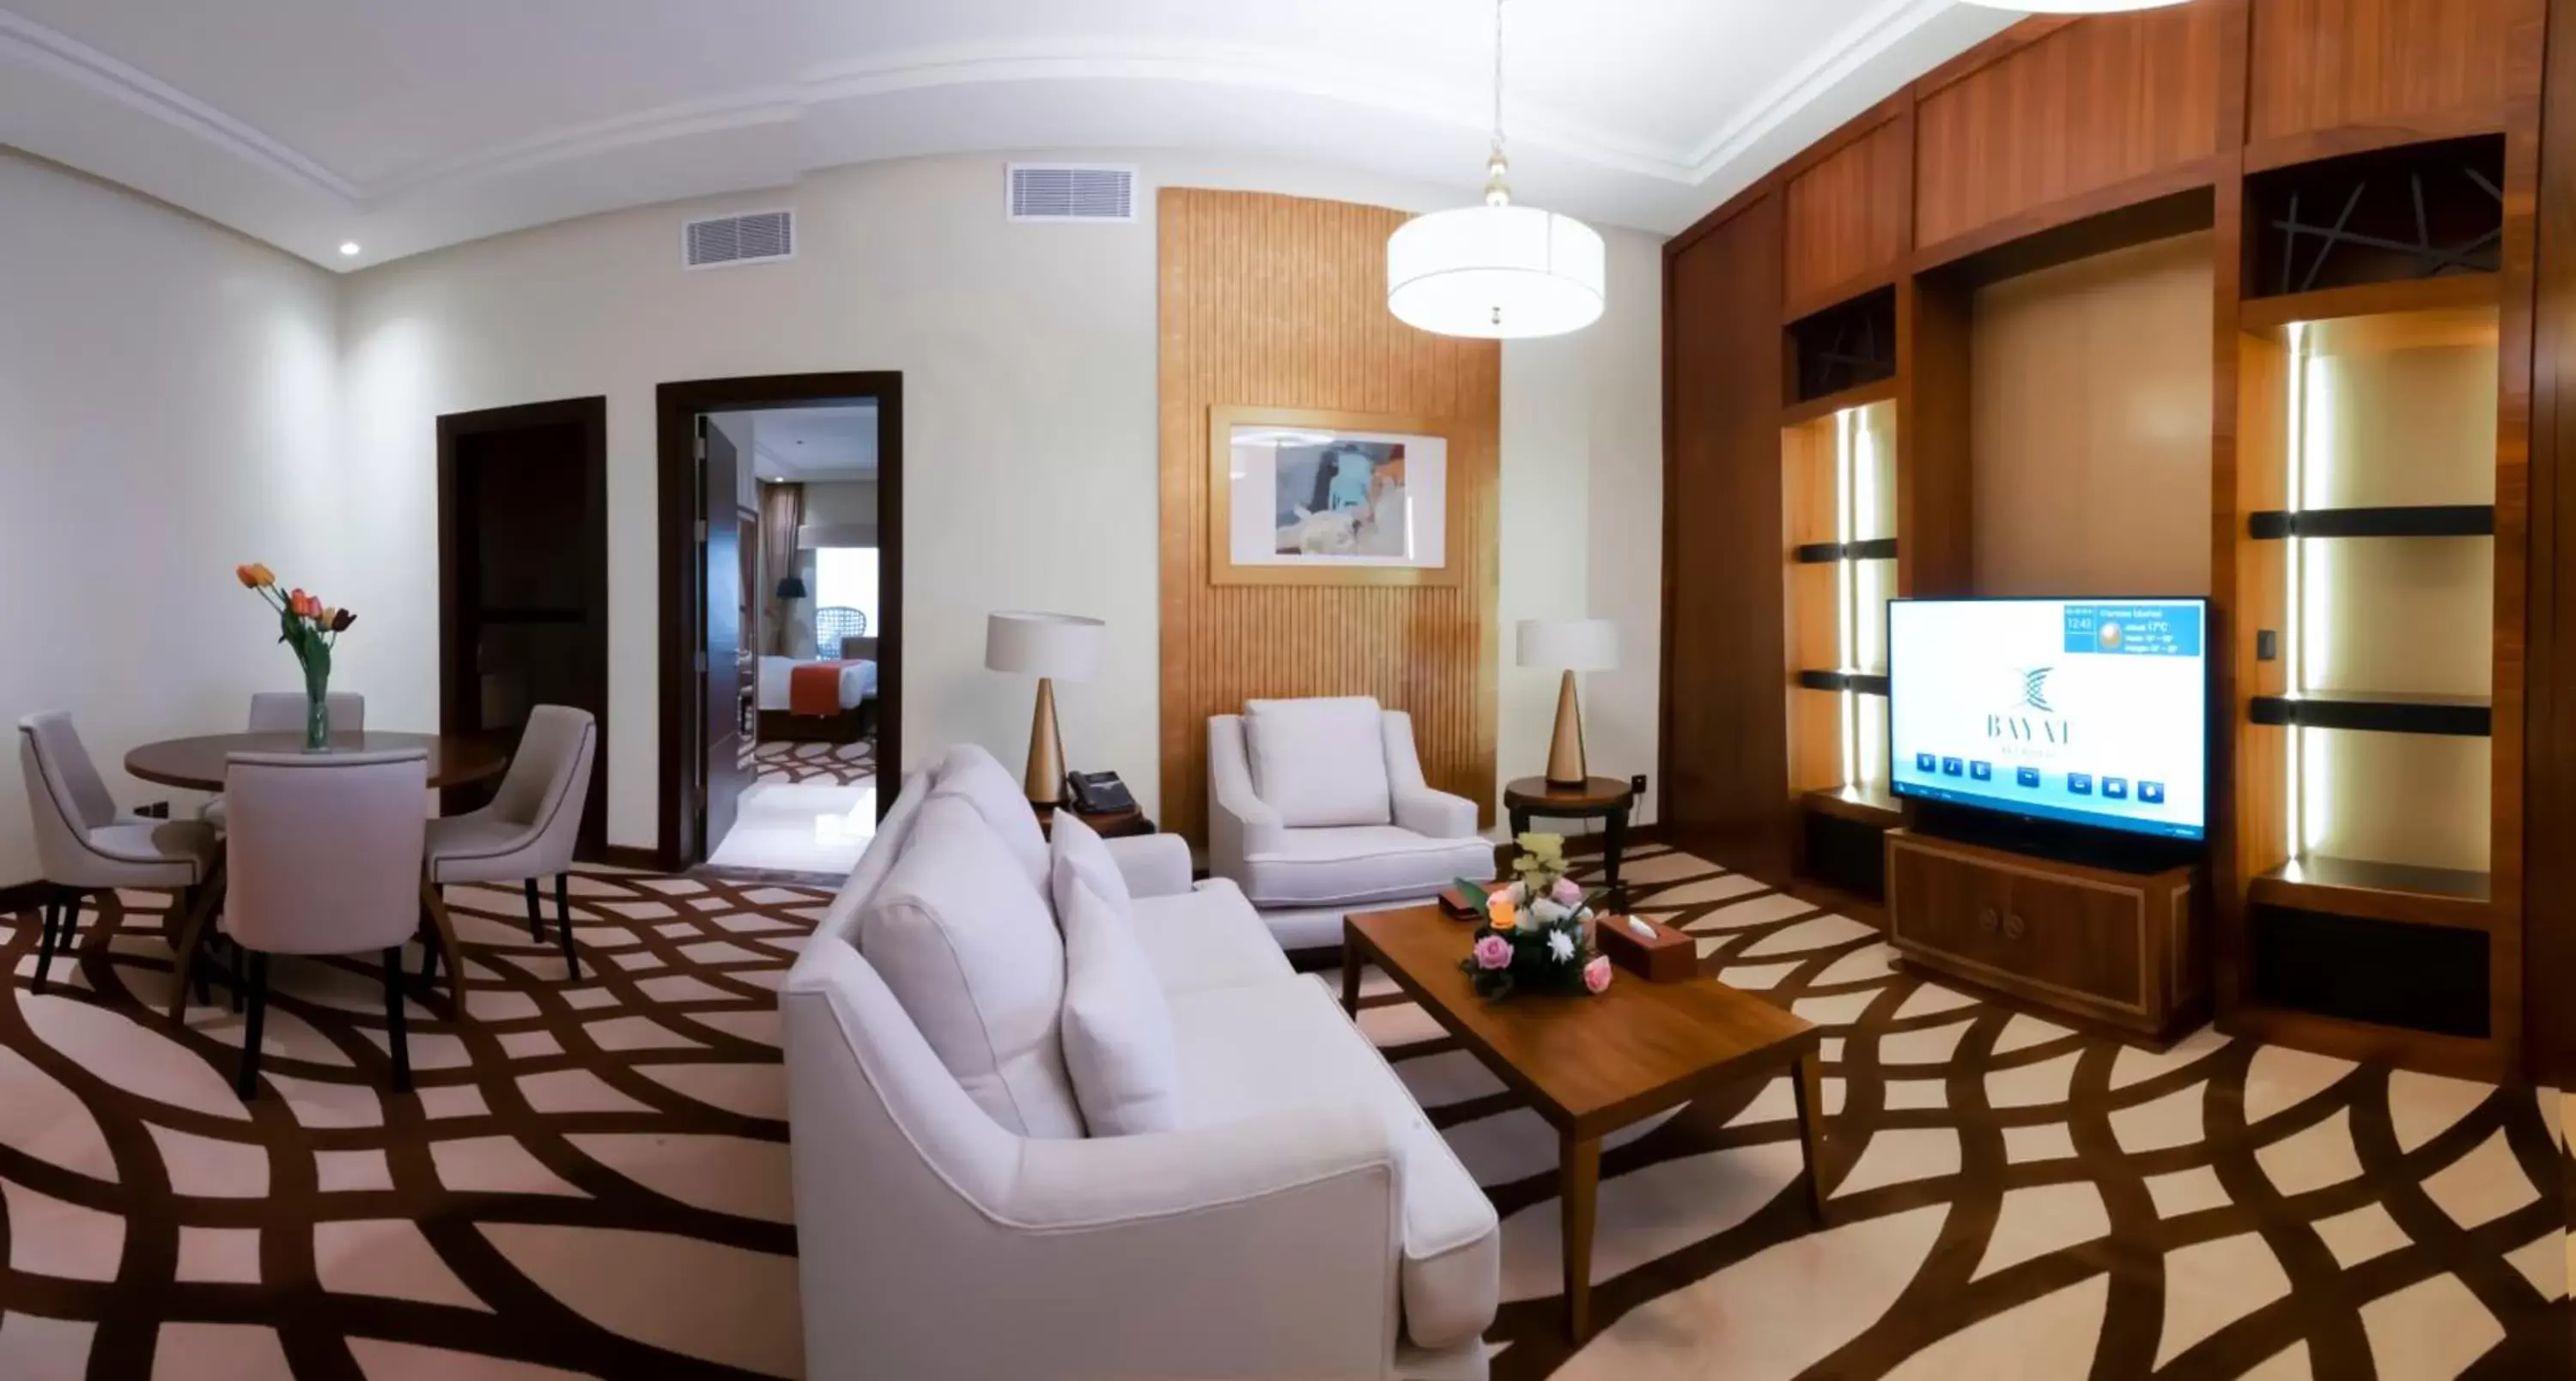 Seating Area in Bayat Hotel